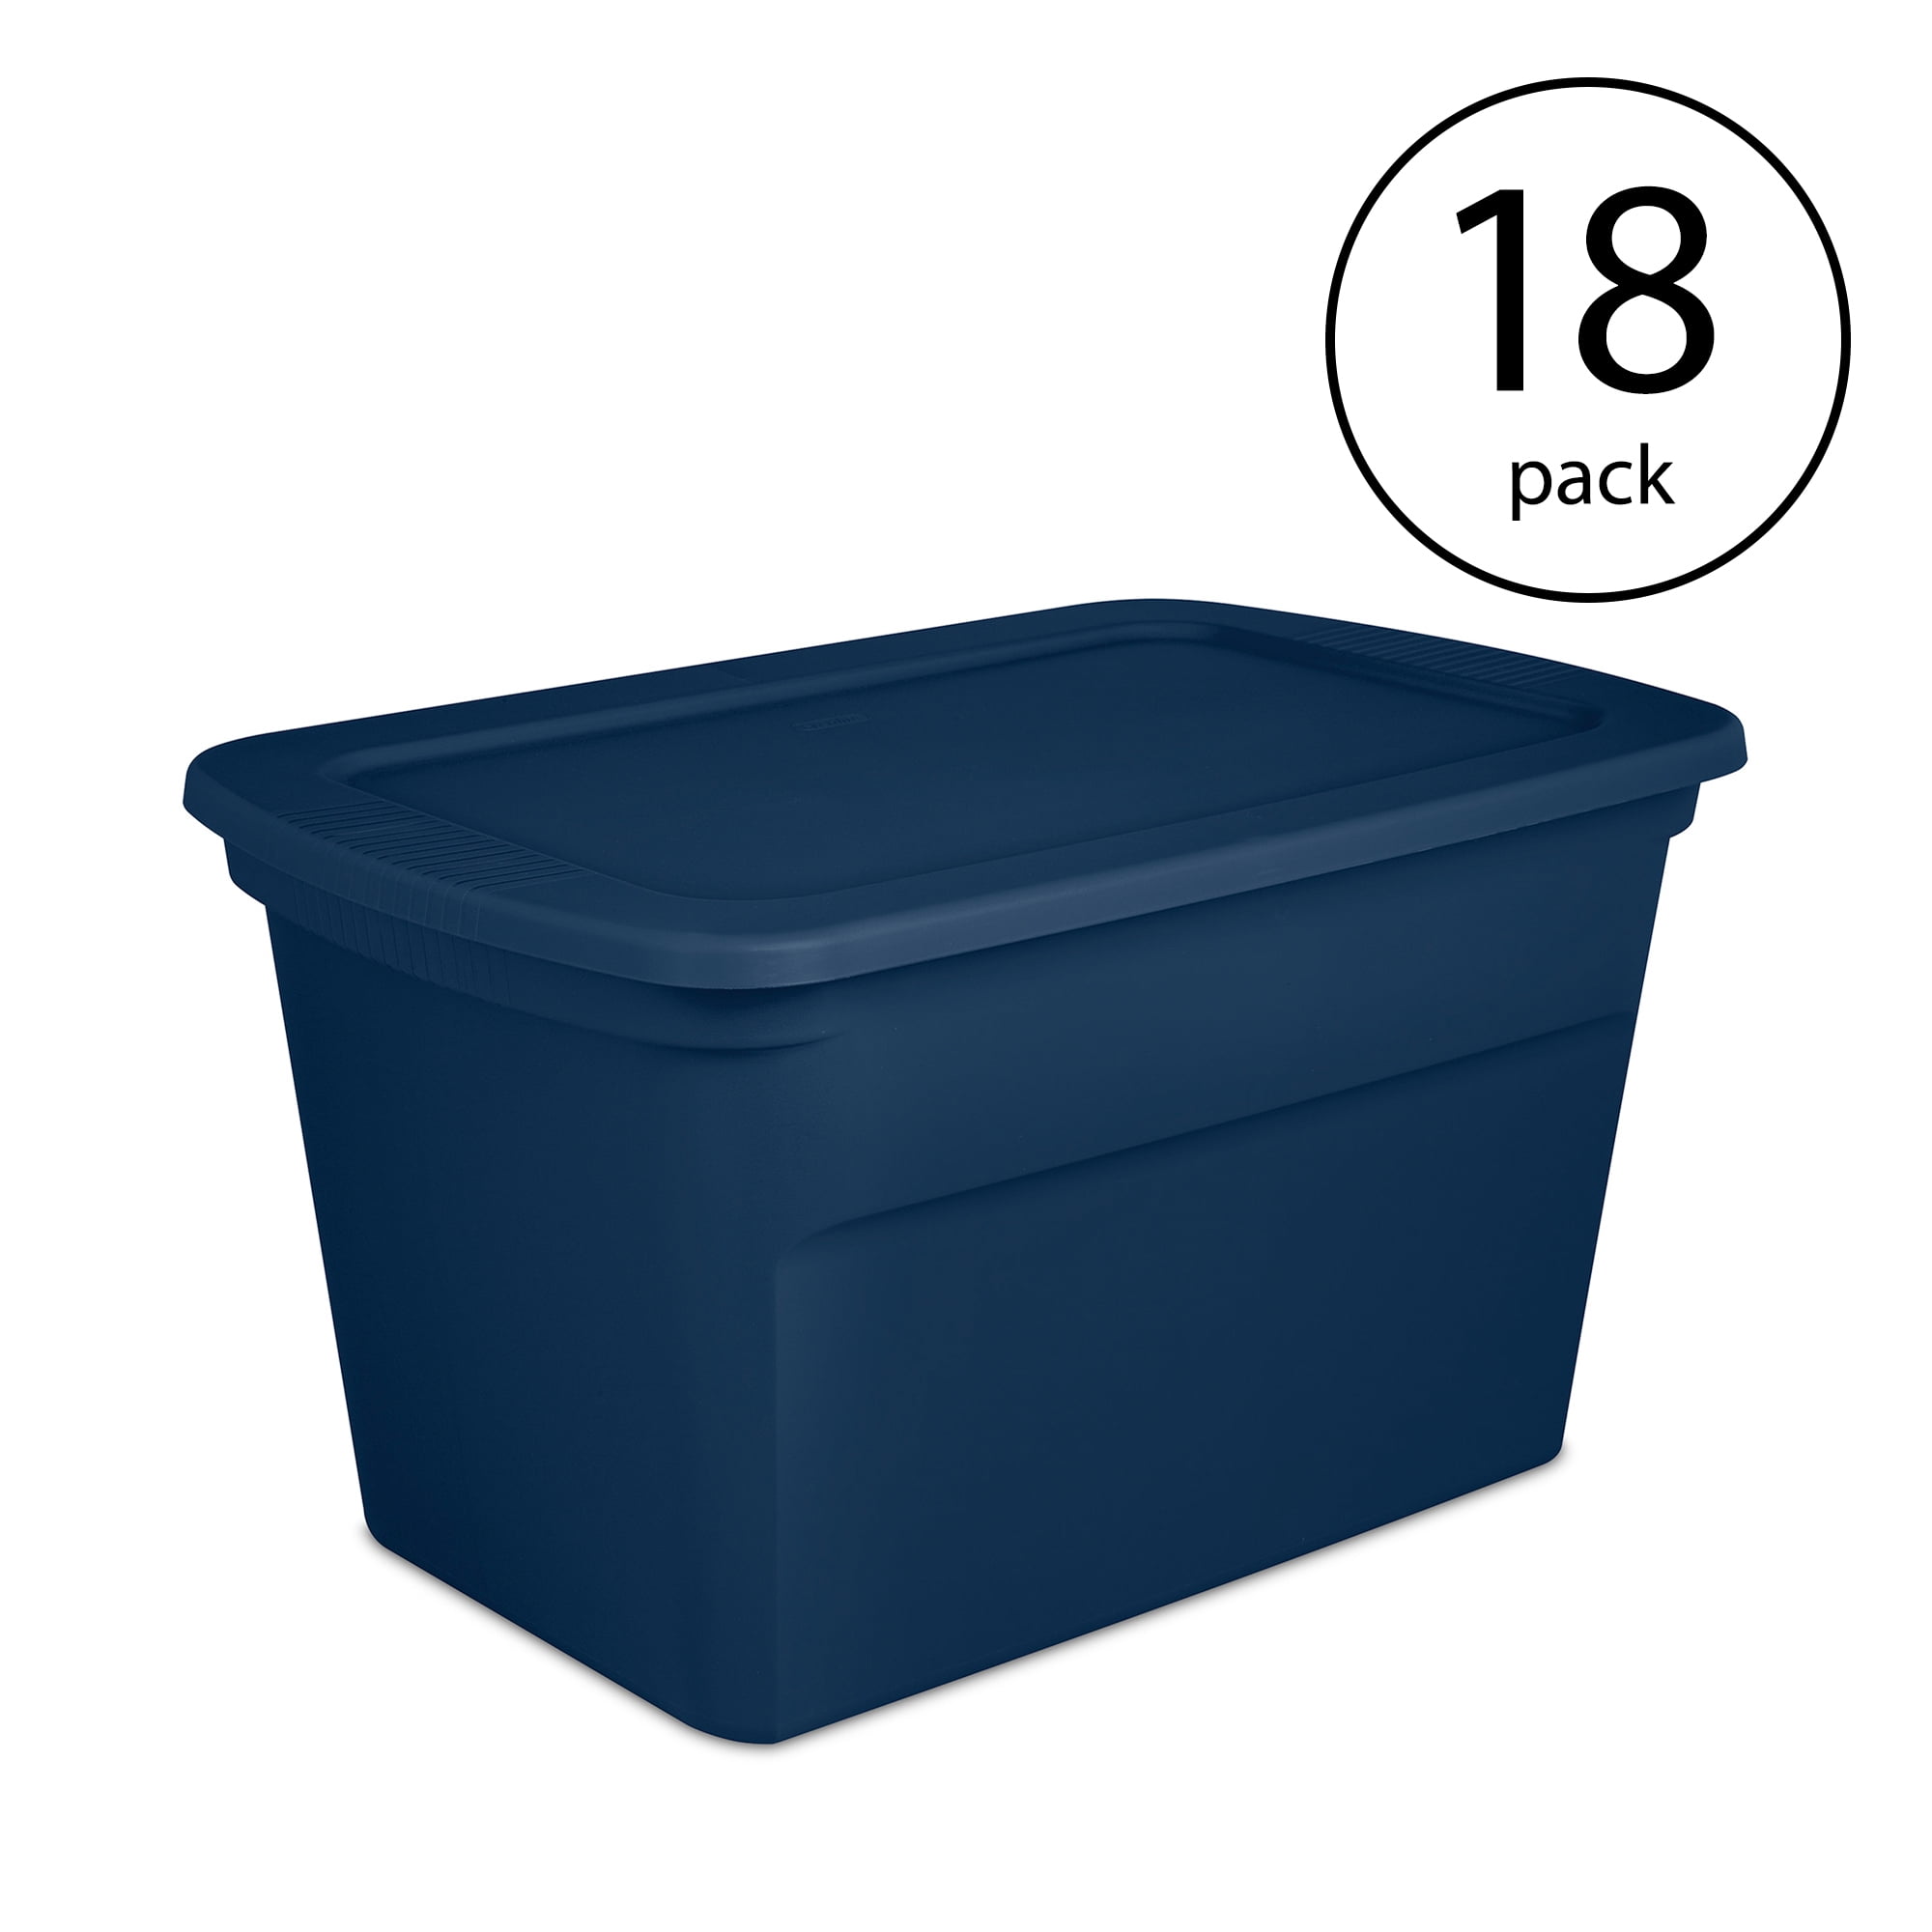 STERILITE 10 Gallon/38 Liter Ultra Storage Tote, True Blue, 22.75″ x 16.63″  x 8.75″ – Pack of 6 – Find Organizers That Fit